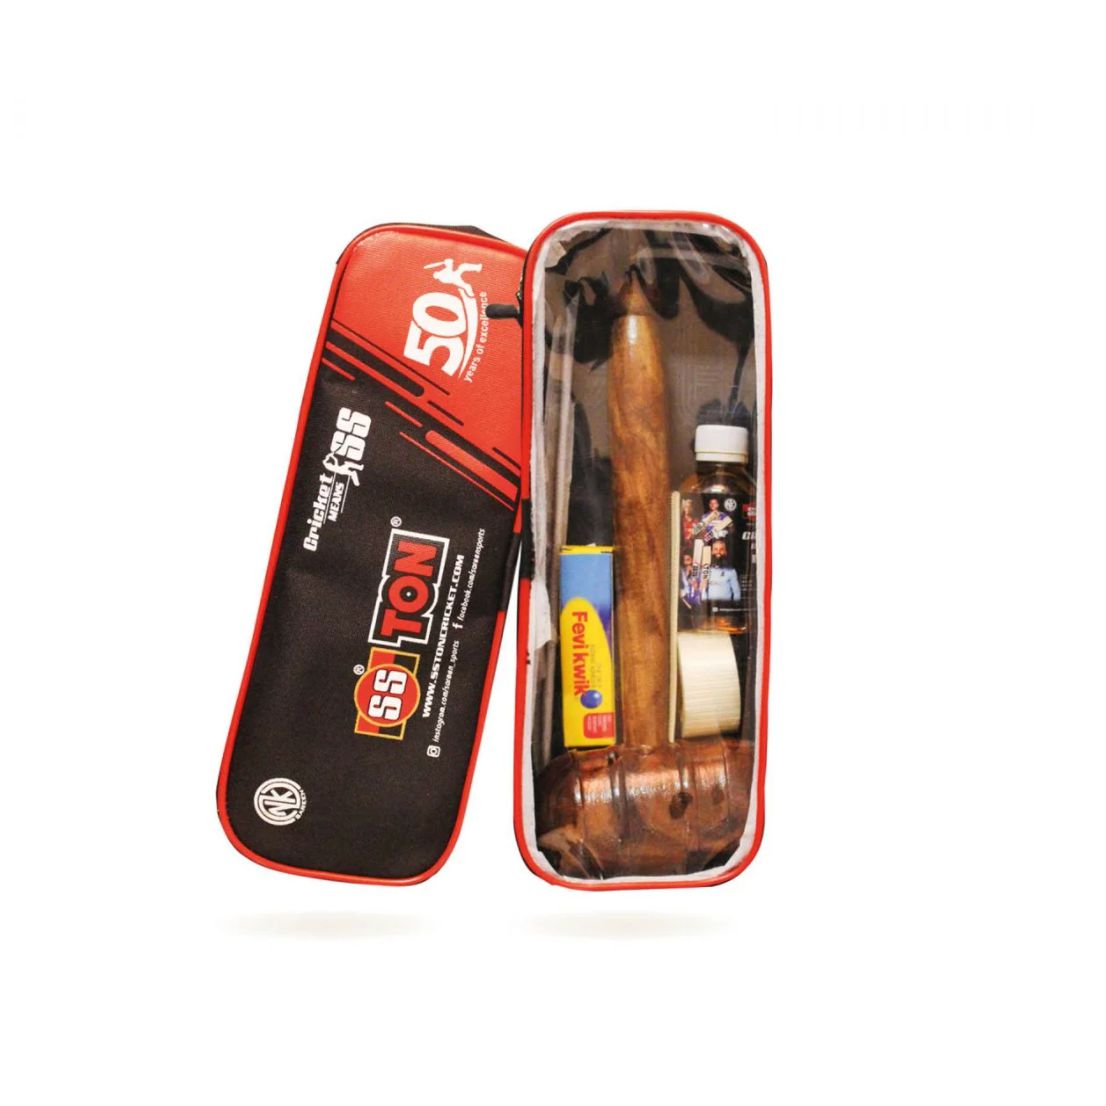 SS Maximus Bat Care Kit Kocking Kit with Mallet - Bat Protection Oil, Tape, Adhesive